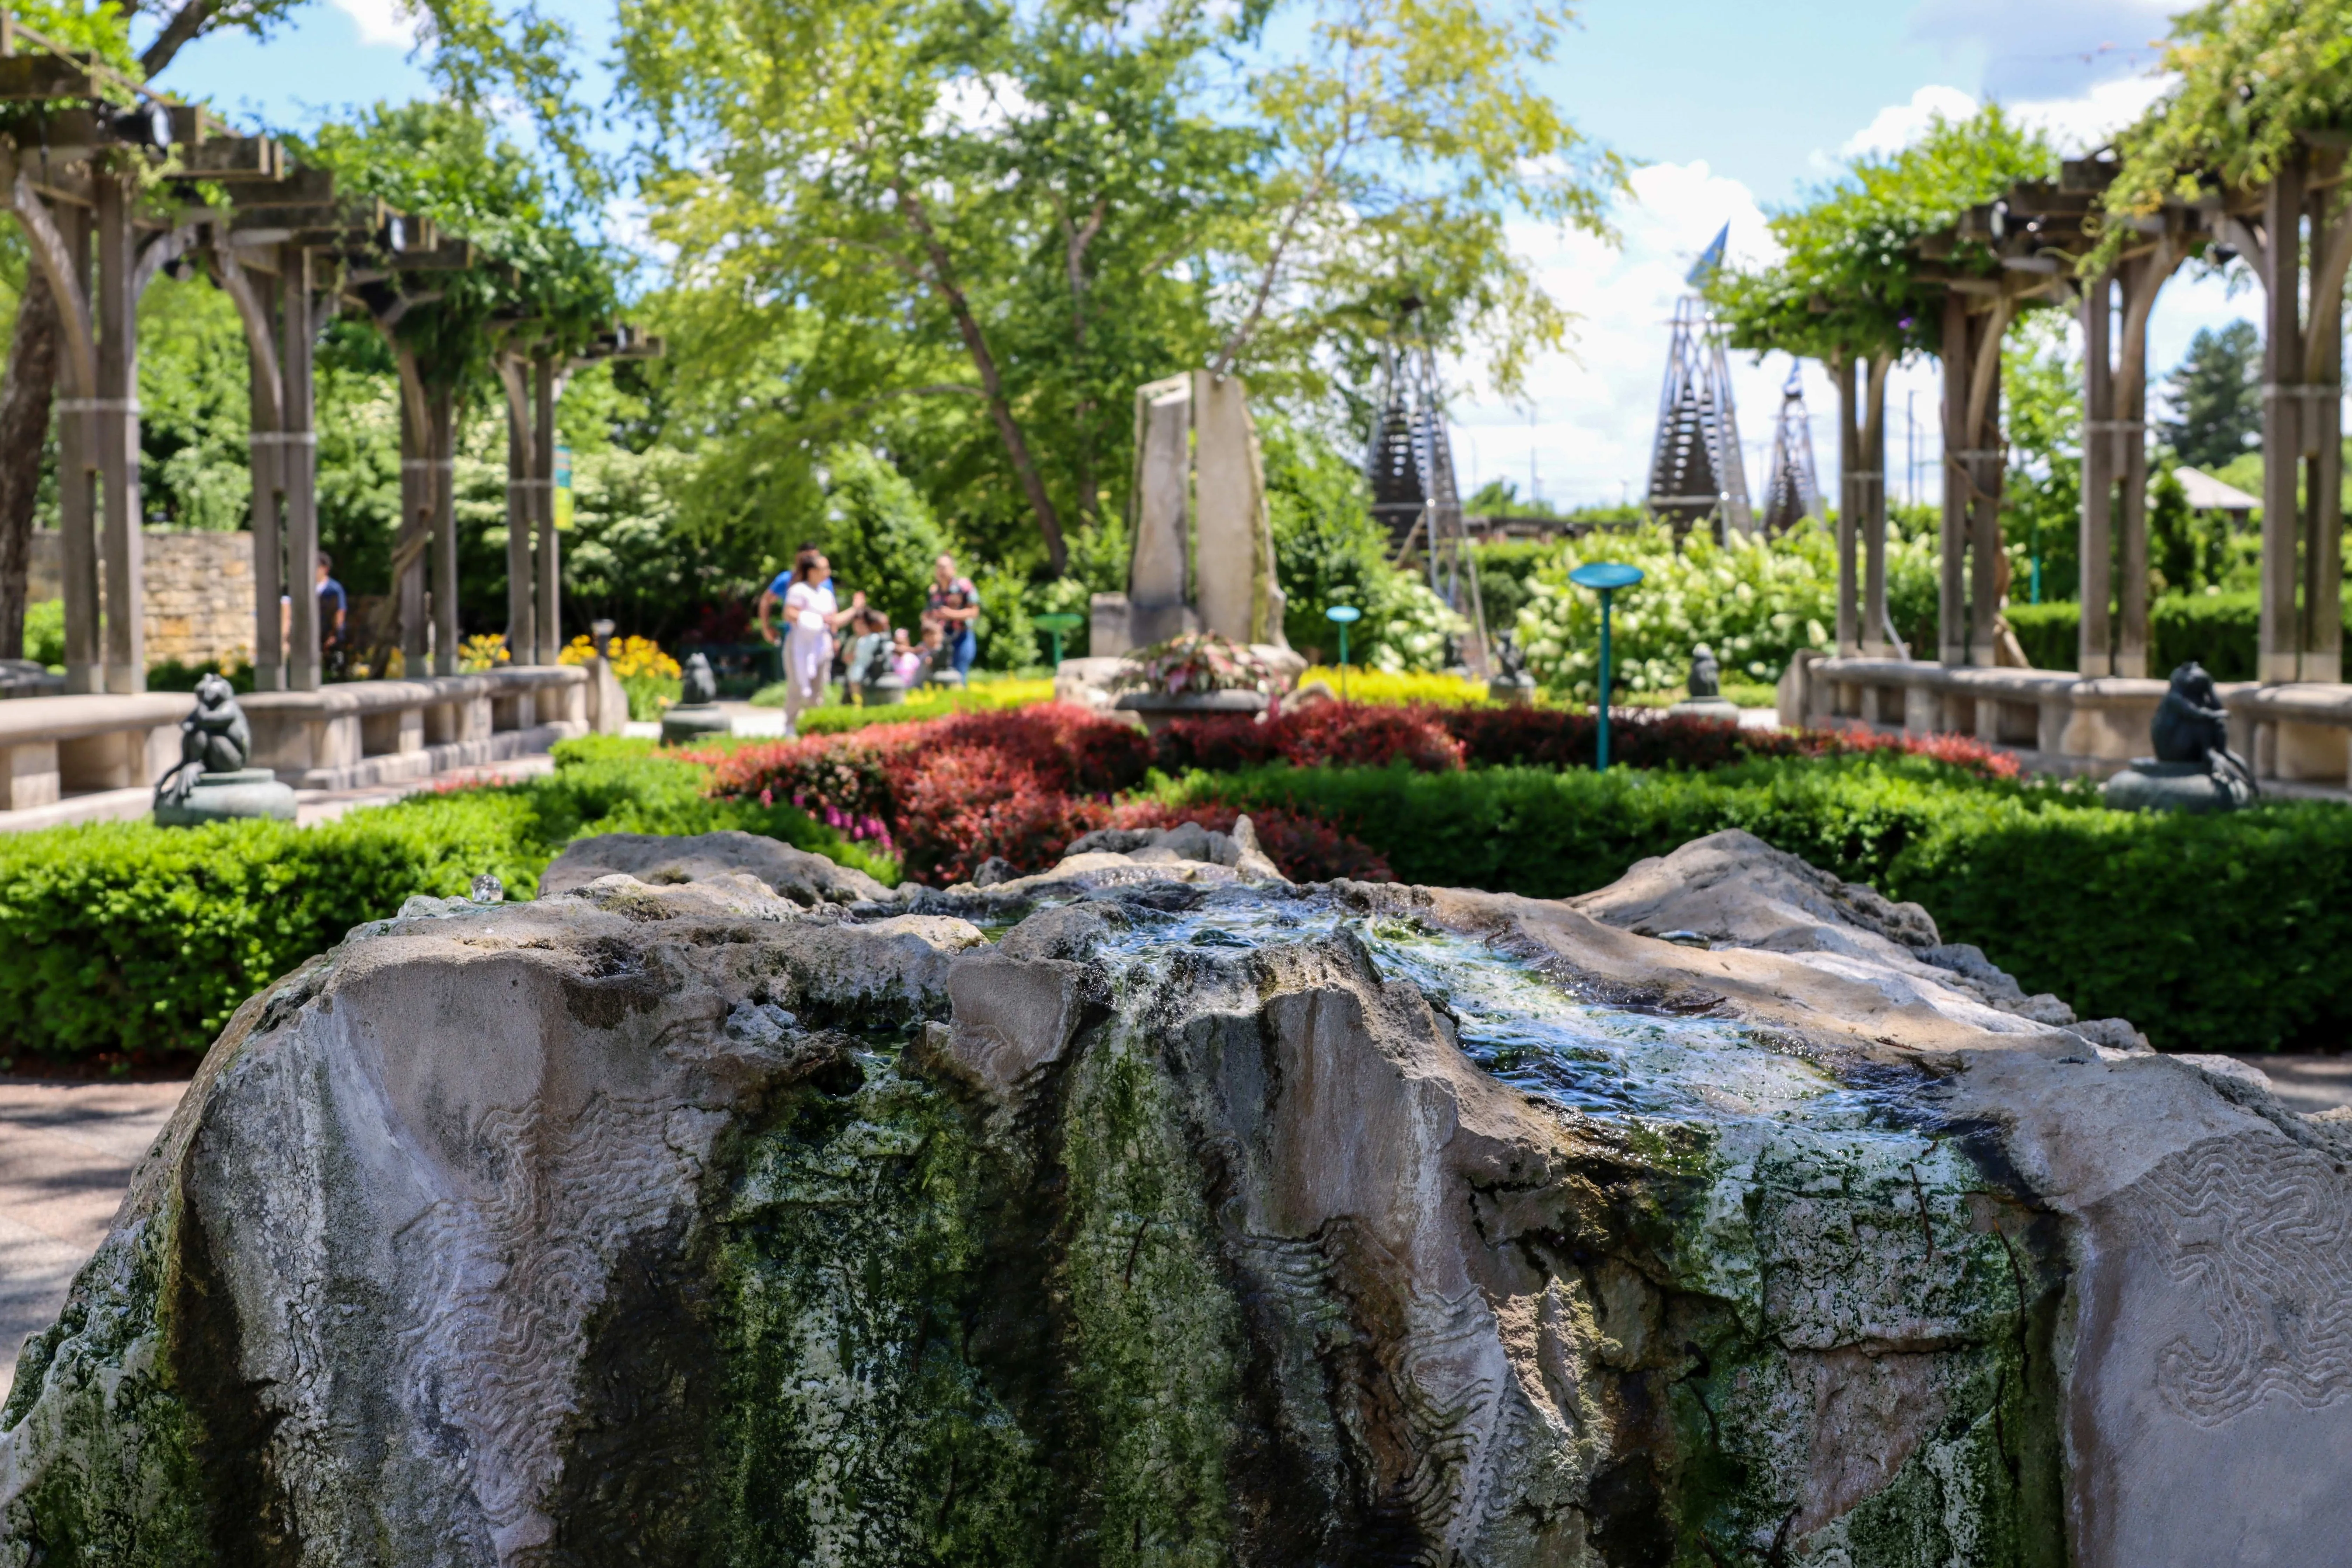 DeHaan Tiergarten with limestone fountain in foreground